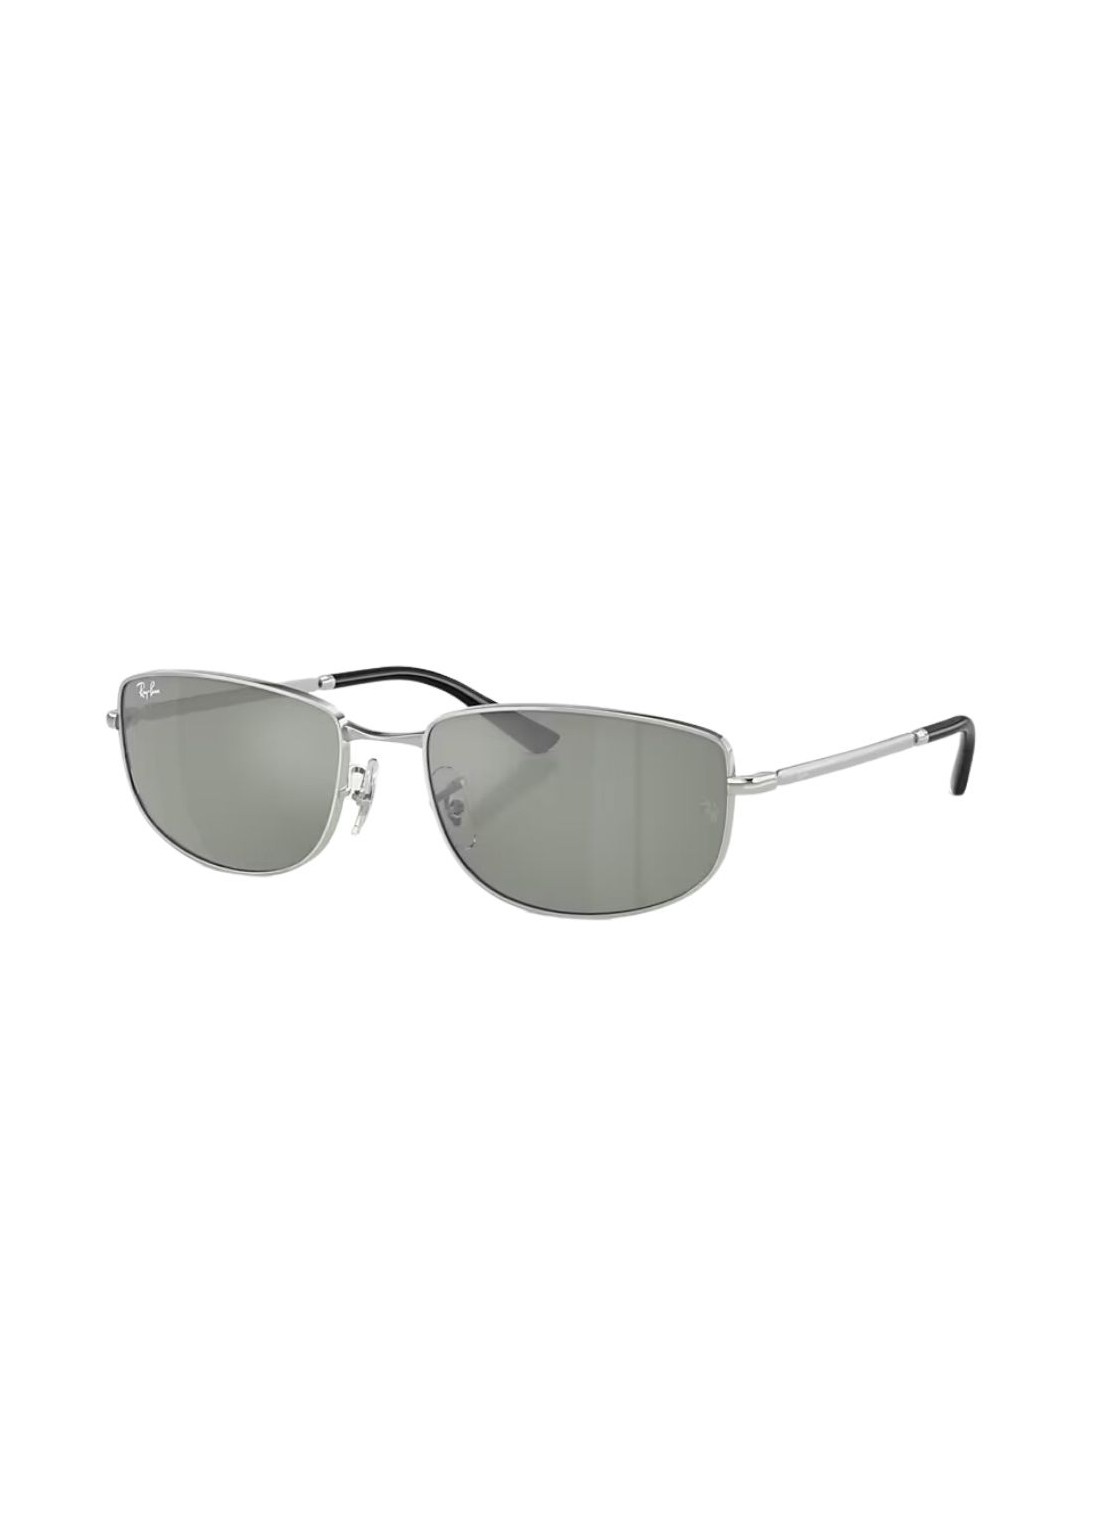 Gafas rayban sunglasses unisex0rb3732 - 0rb3732 003/40 talla 59
 